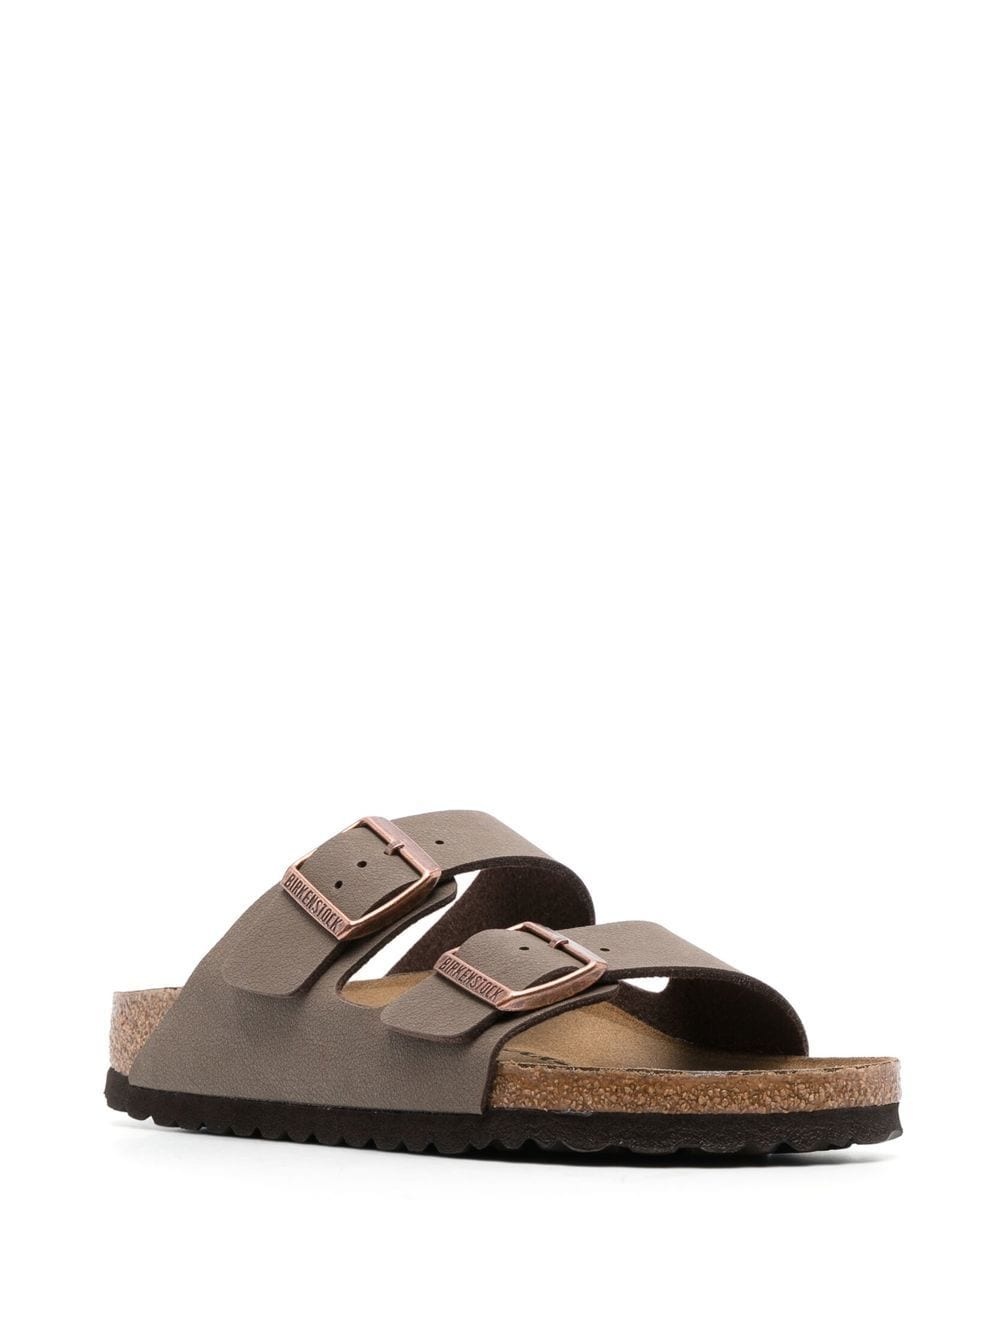 Arizona leather sandals - 2